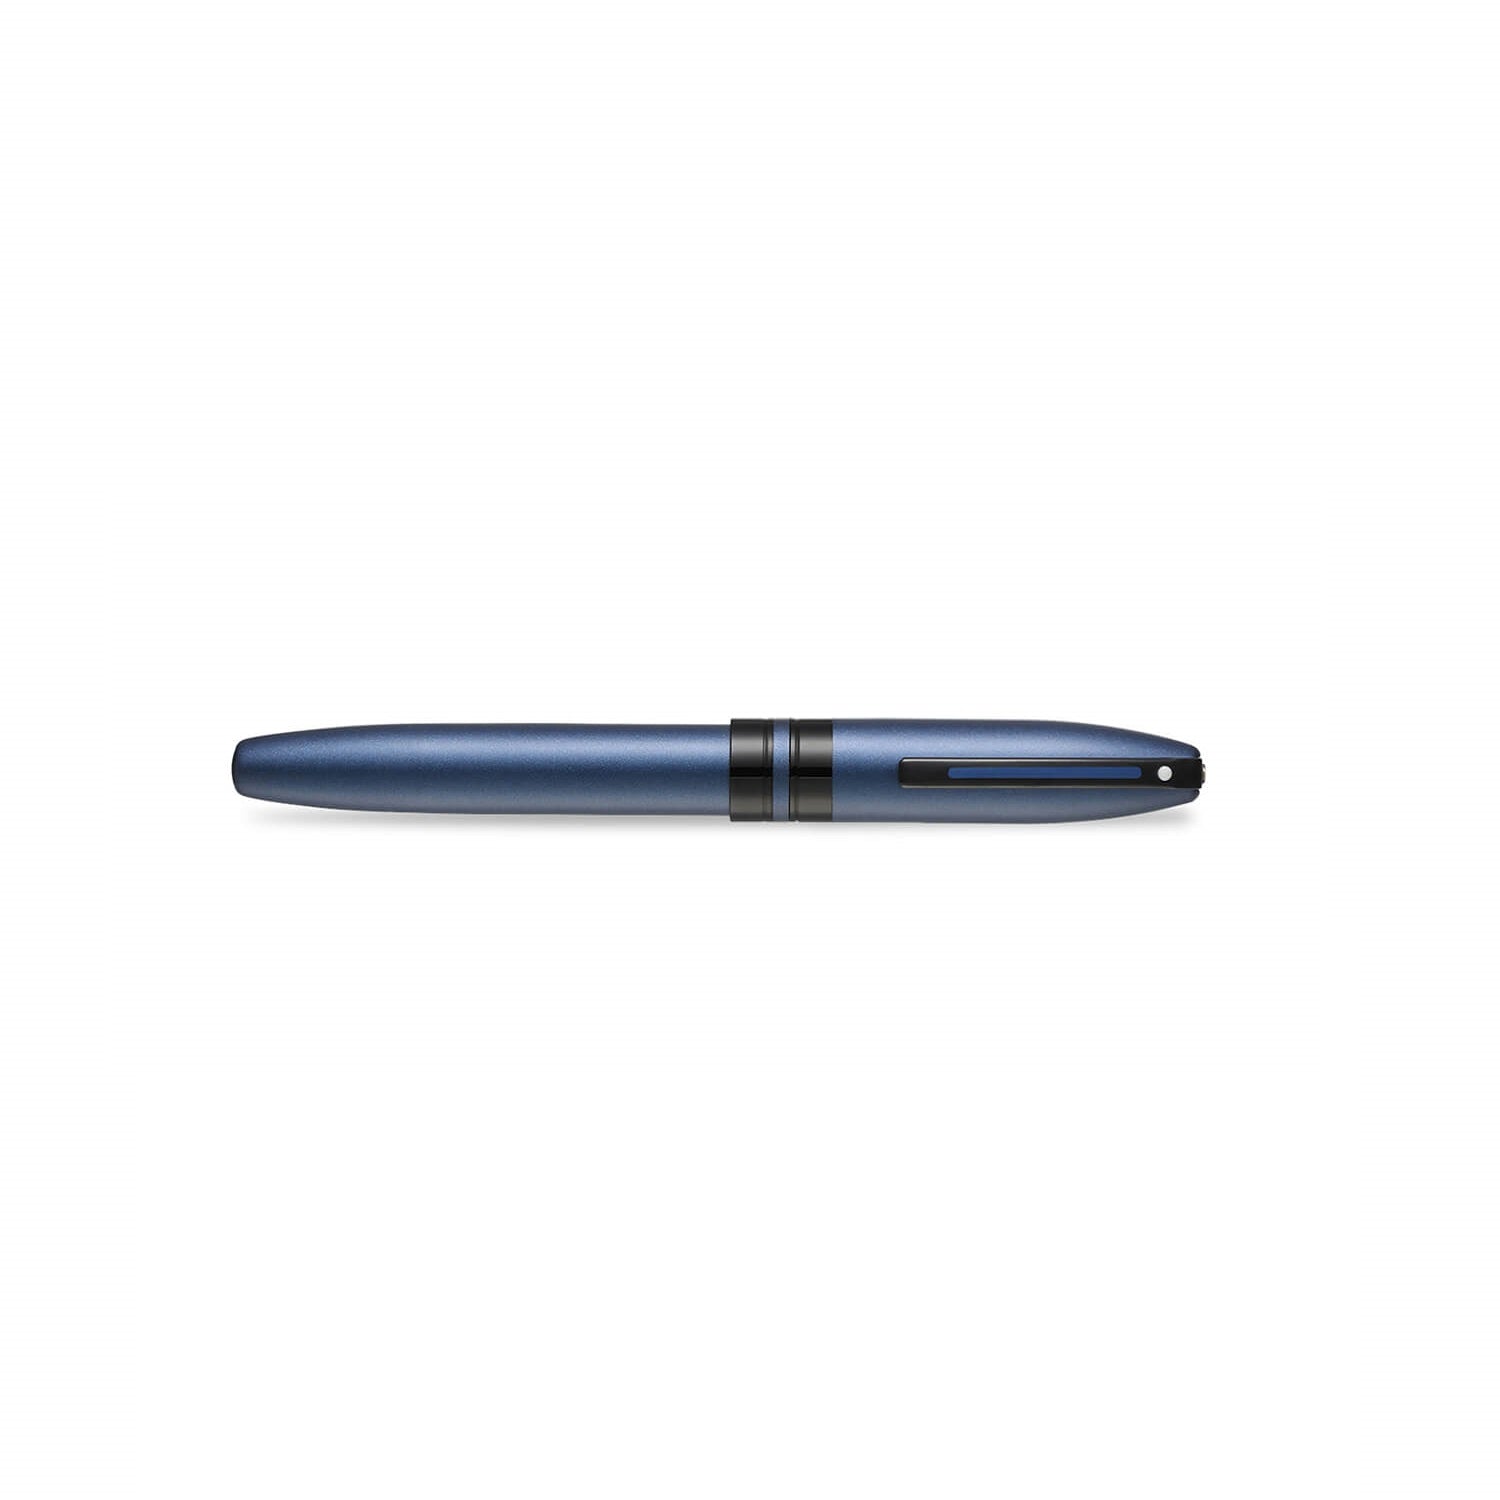 Sheaffer® ICON 9110 Metalic Blue Rollerball Pen With Gloss Black Trim